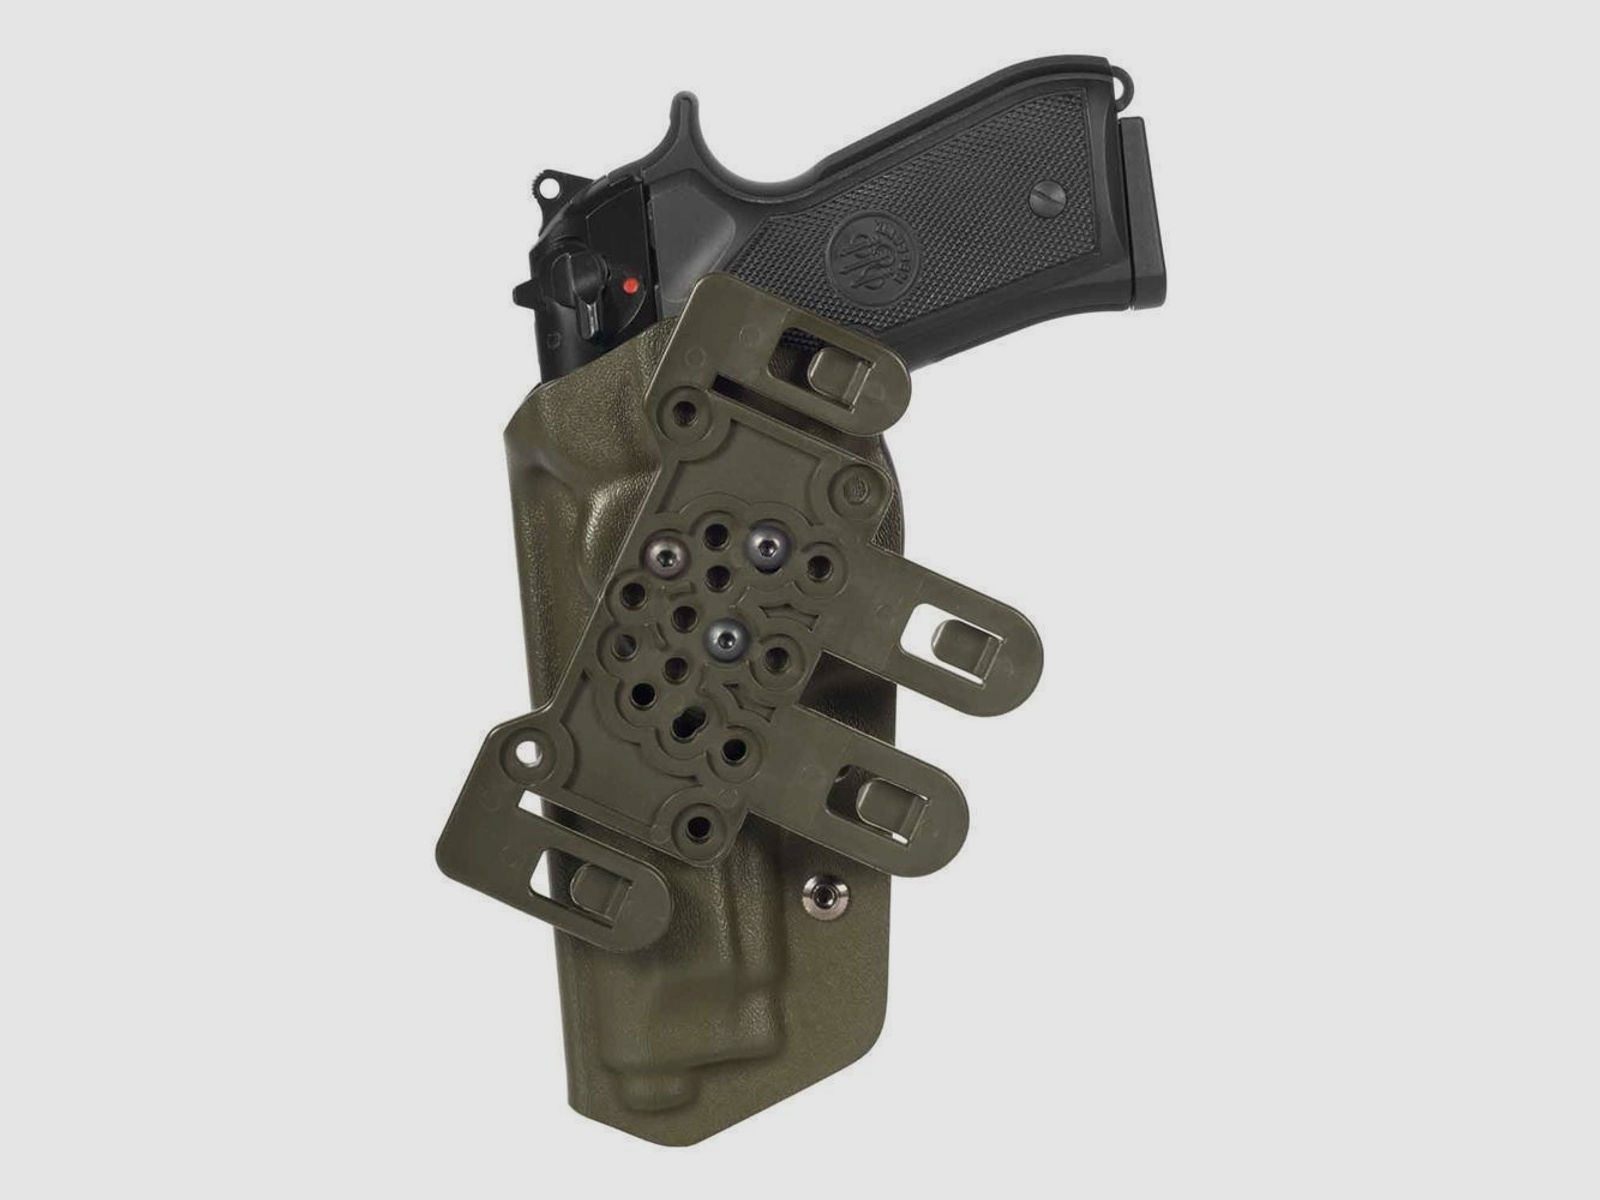 Brustholster mit MOLLE Plattform Beretta PX4 Storm / Compact / 8000-Coyote Tan-Rechtshänder